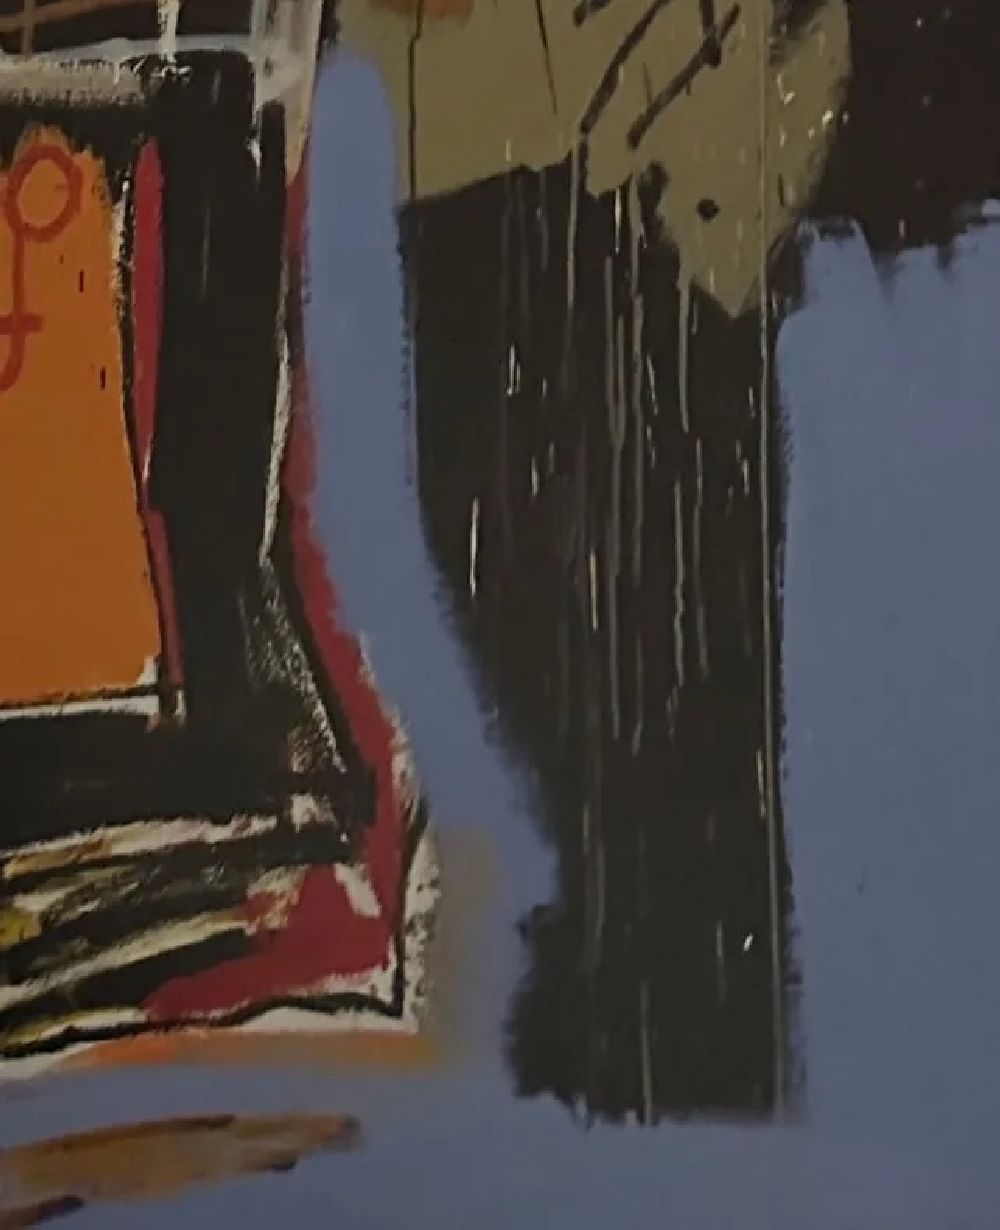 Jean-Michel Basquiat "Untitled" Print. - Image 5 of 6